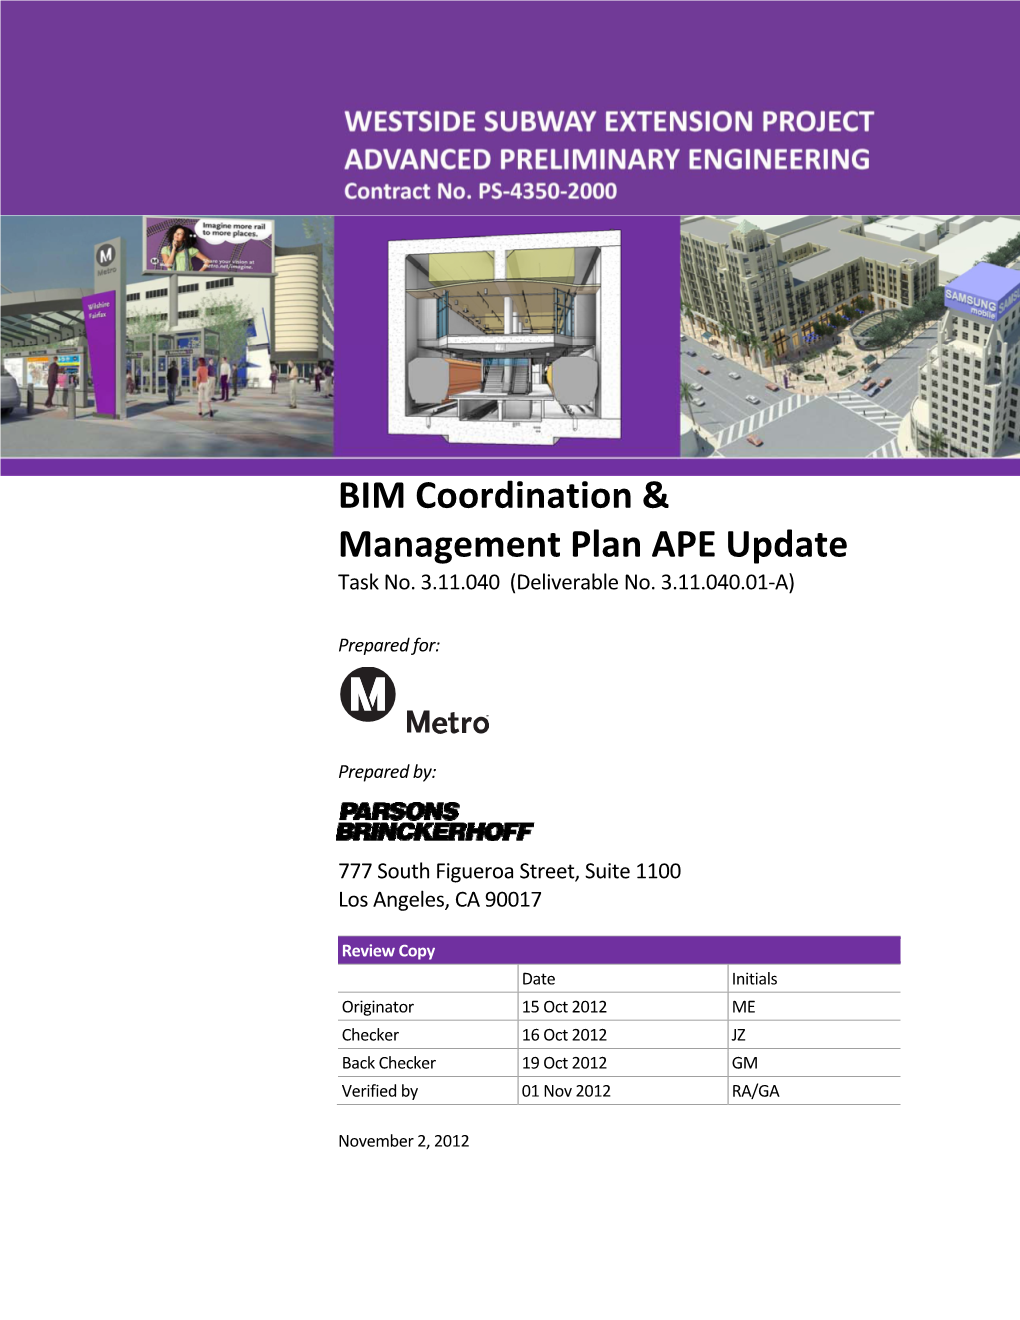 BIM Coordination & Management Plan APE Update